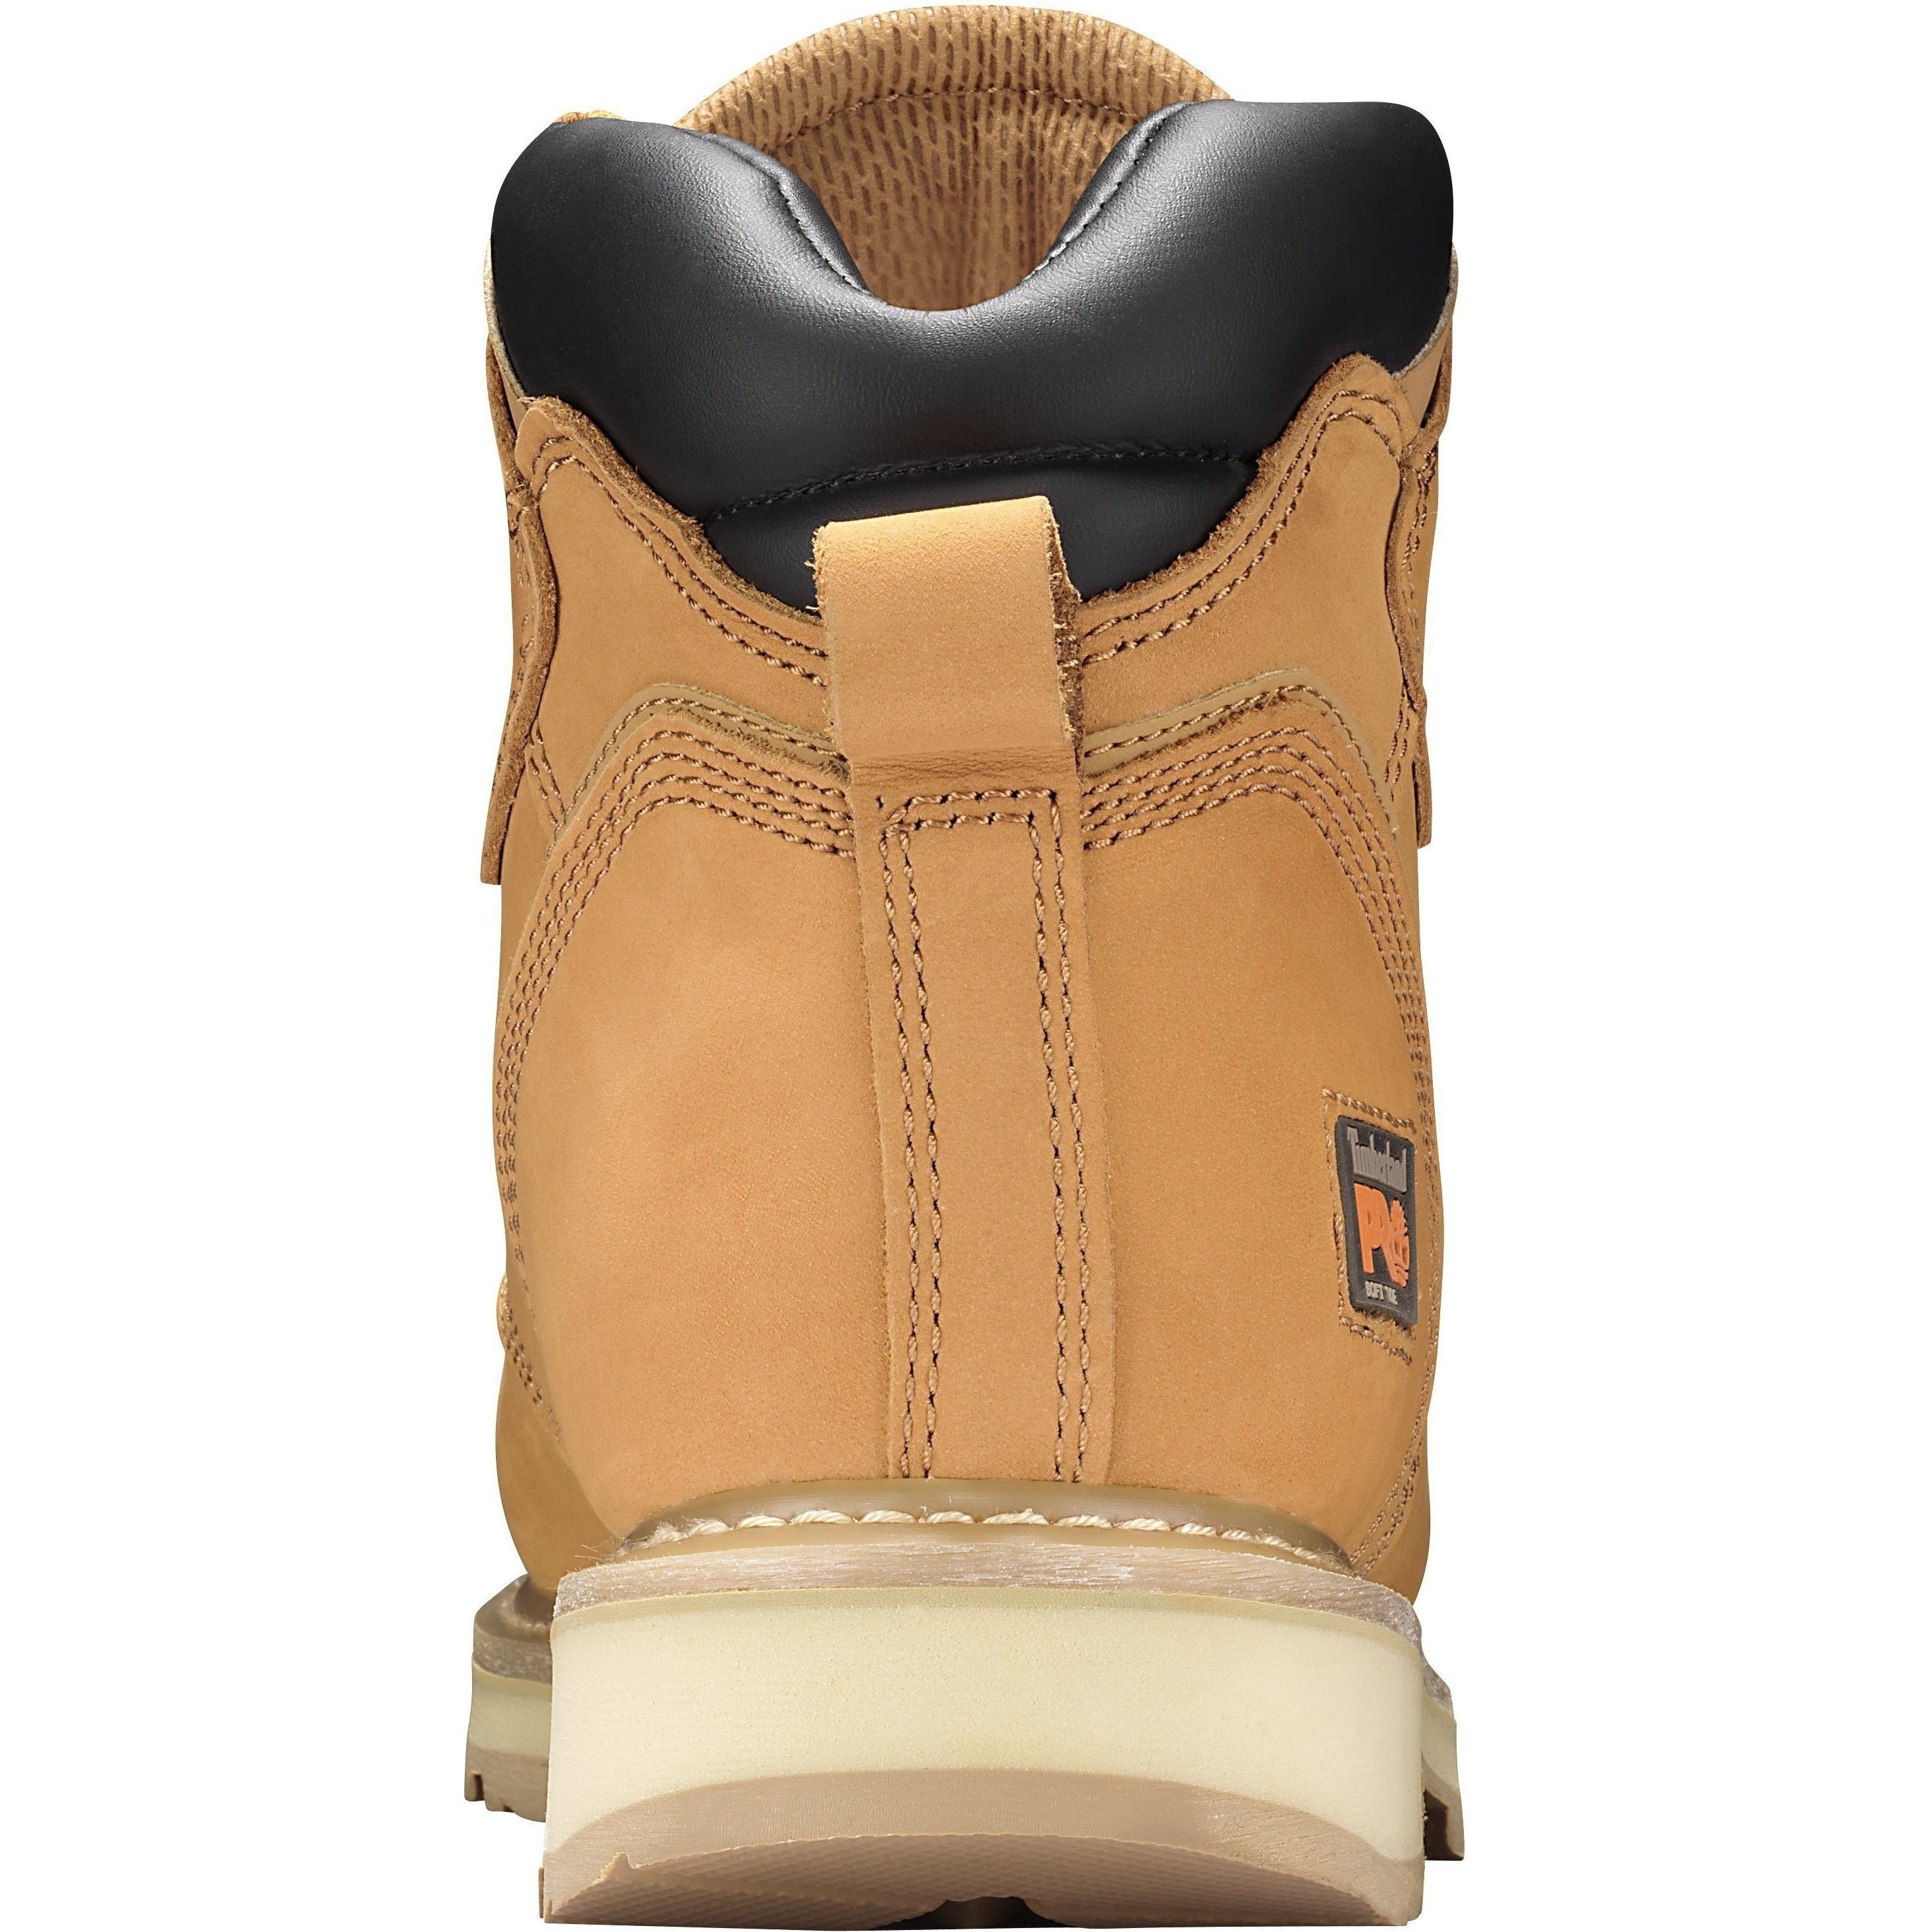 Timberland PRO Men's Pit Boss 6" Soft Toe Work Boot Wheat TB033030231  - Overlook Boots